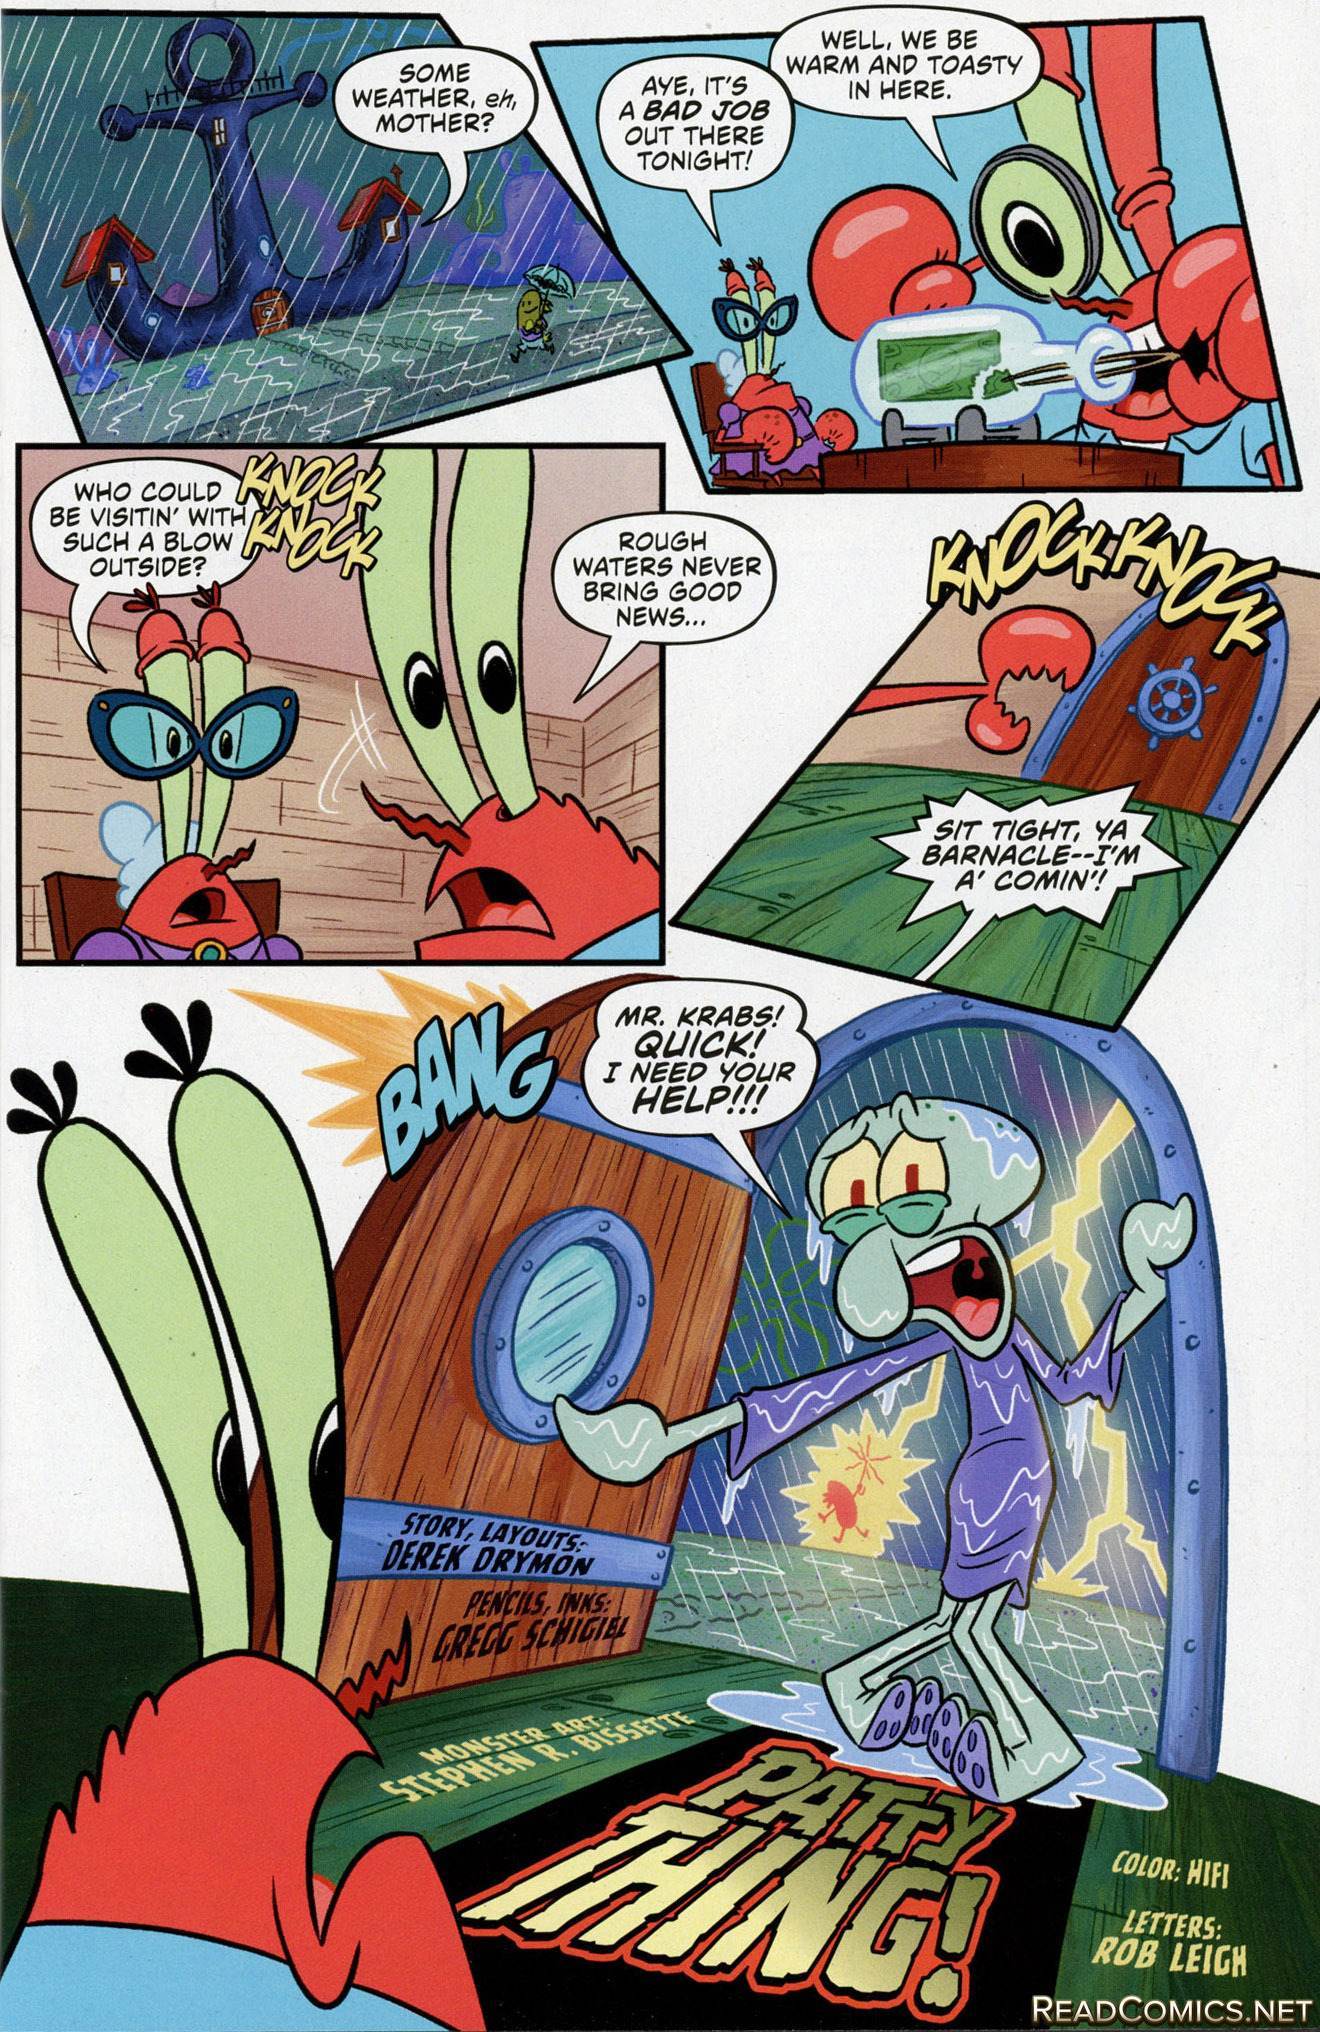 SpongeBob Comics (2011-): Chapter 49 - Page 3